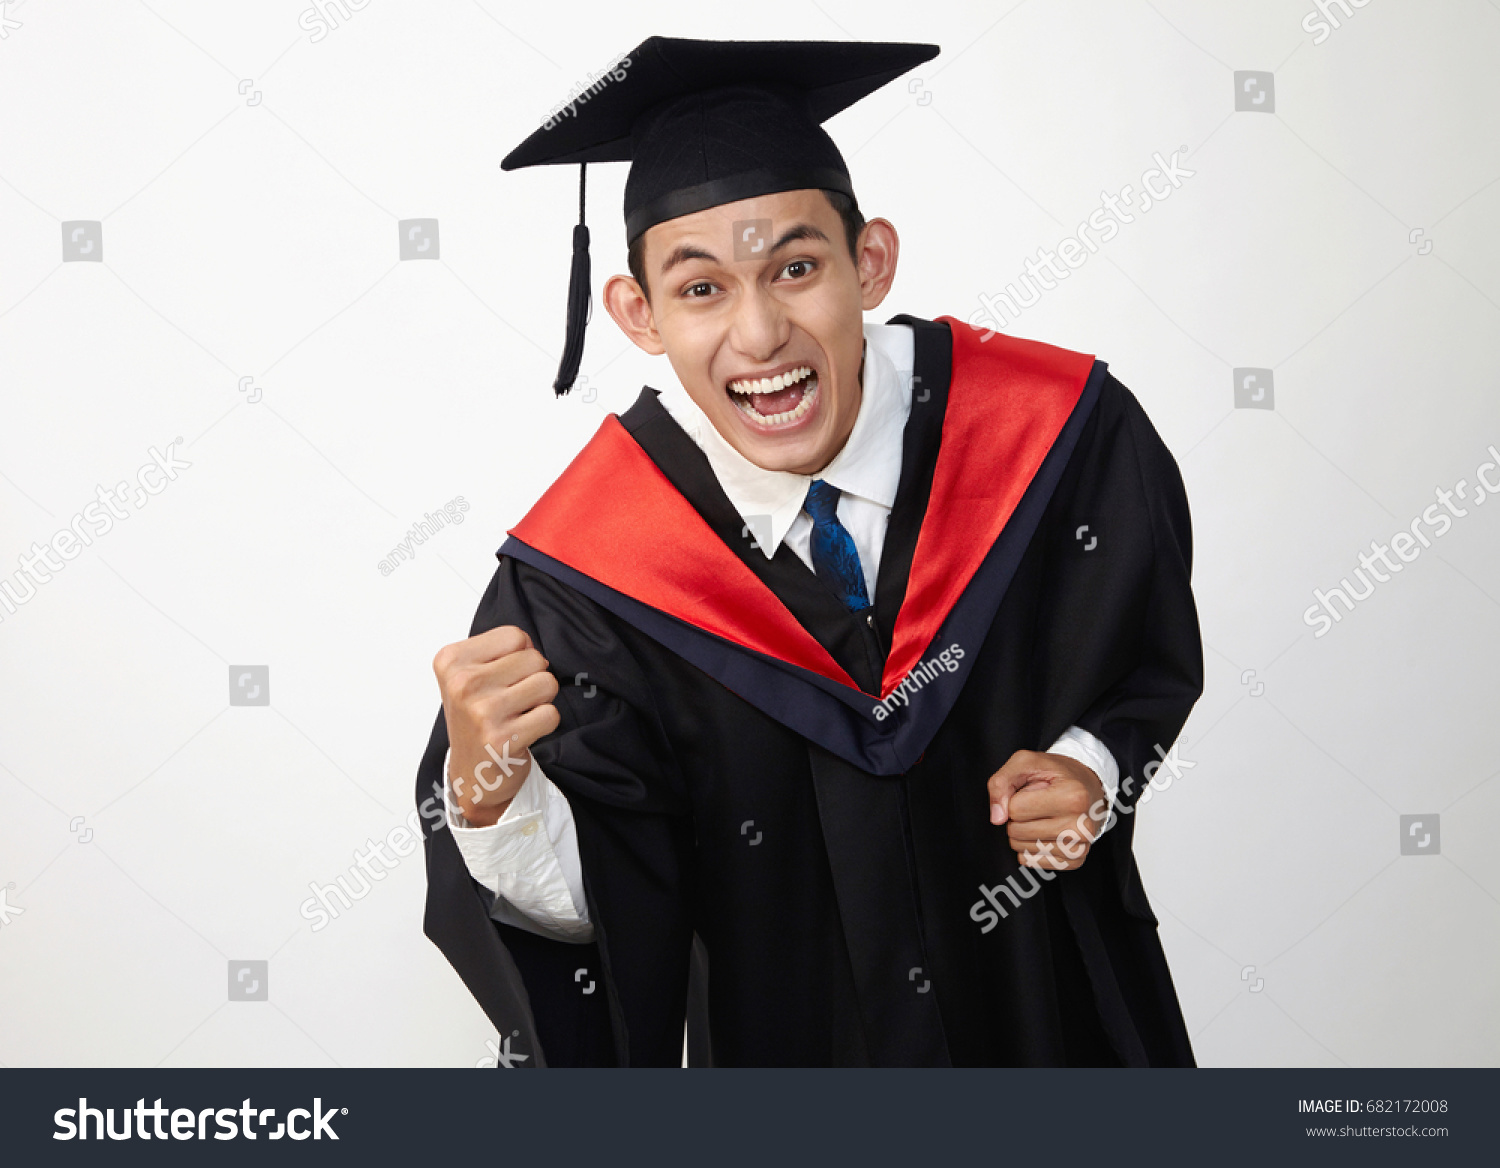 Malay diploma in Diploma in